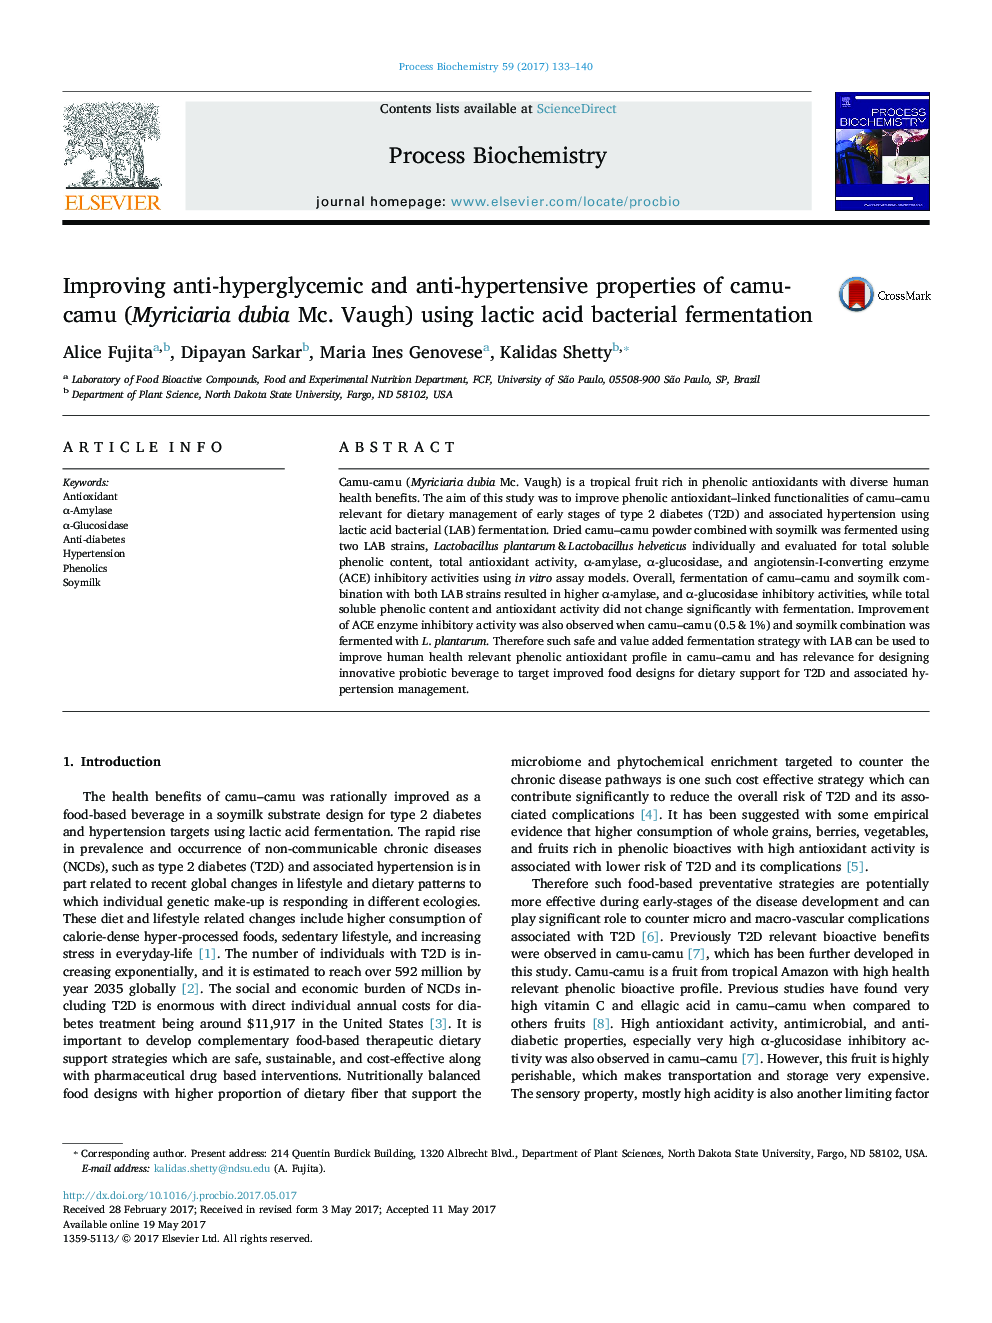 Improving anti-hyperglycemic and anti-hypertensive properties of camu-camu (Myriciaria dubia Mc. Vaugh) using lactic acid bacterial fermentation